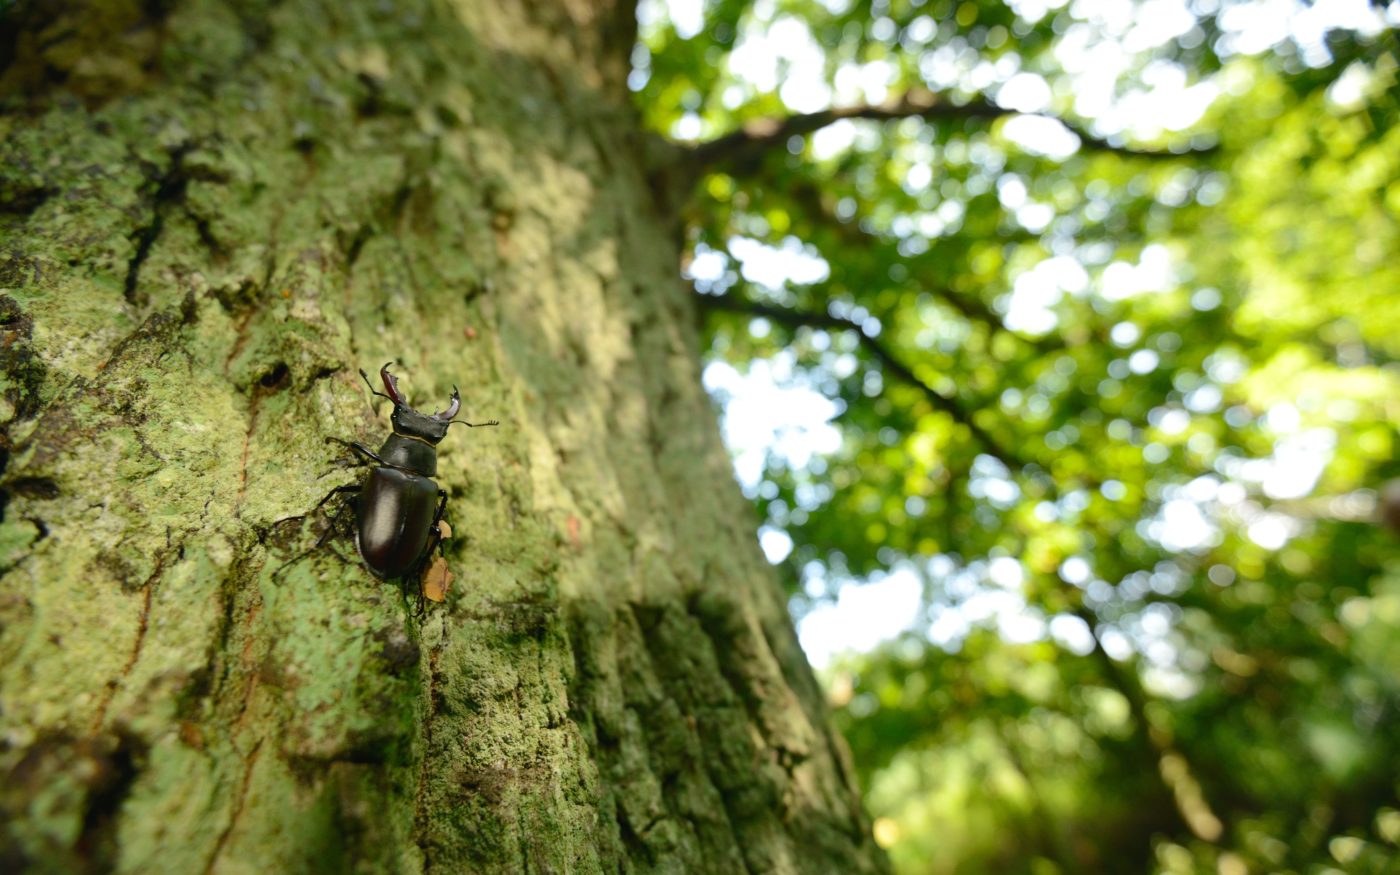 Stag Beetle, Lucanus cervus, climbing up a tree trunk